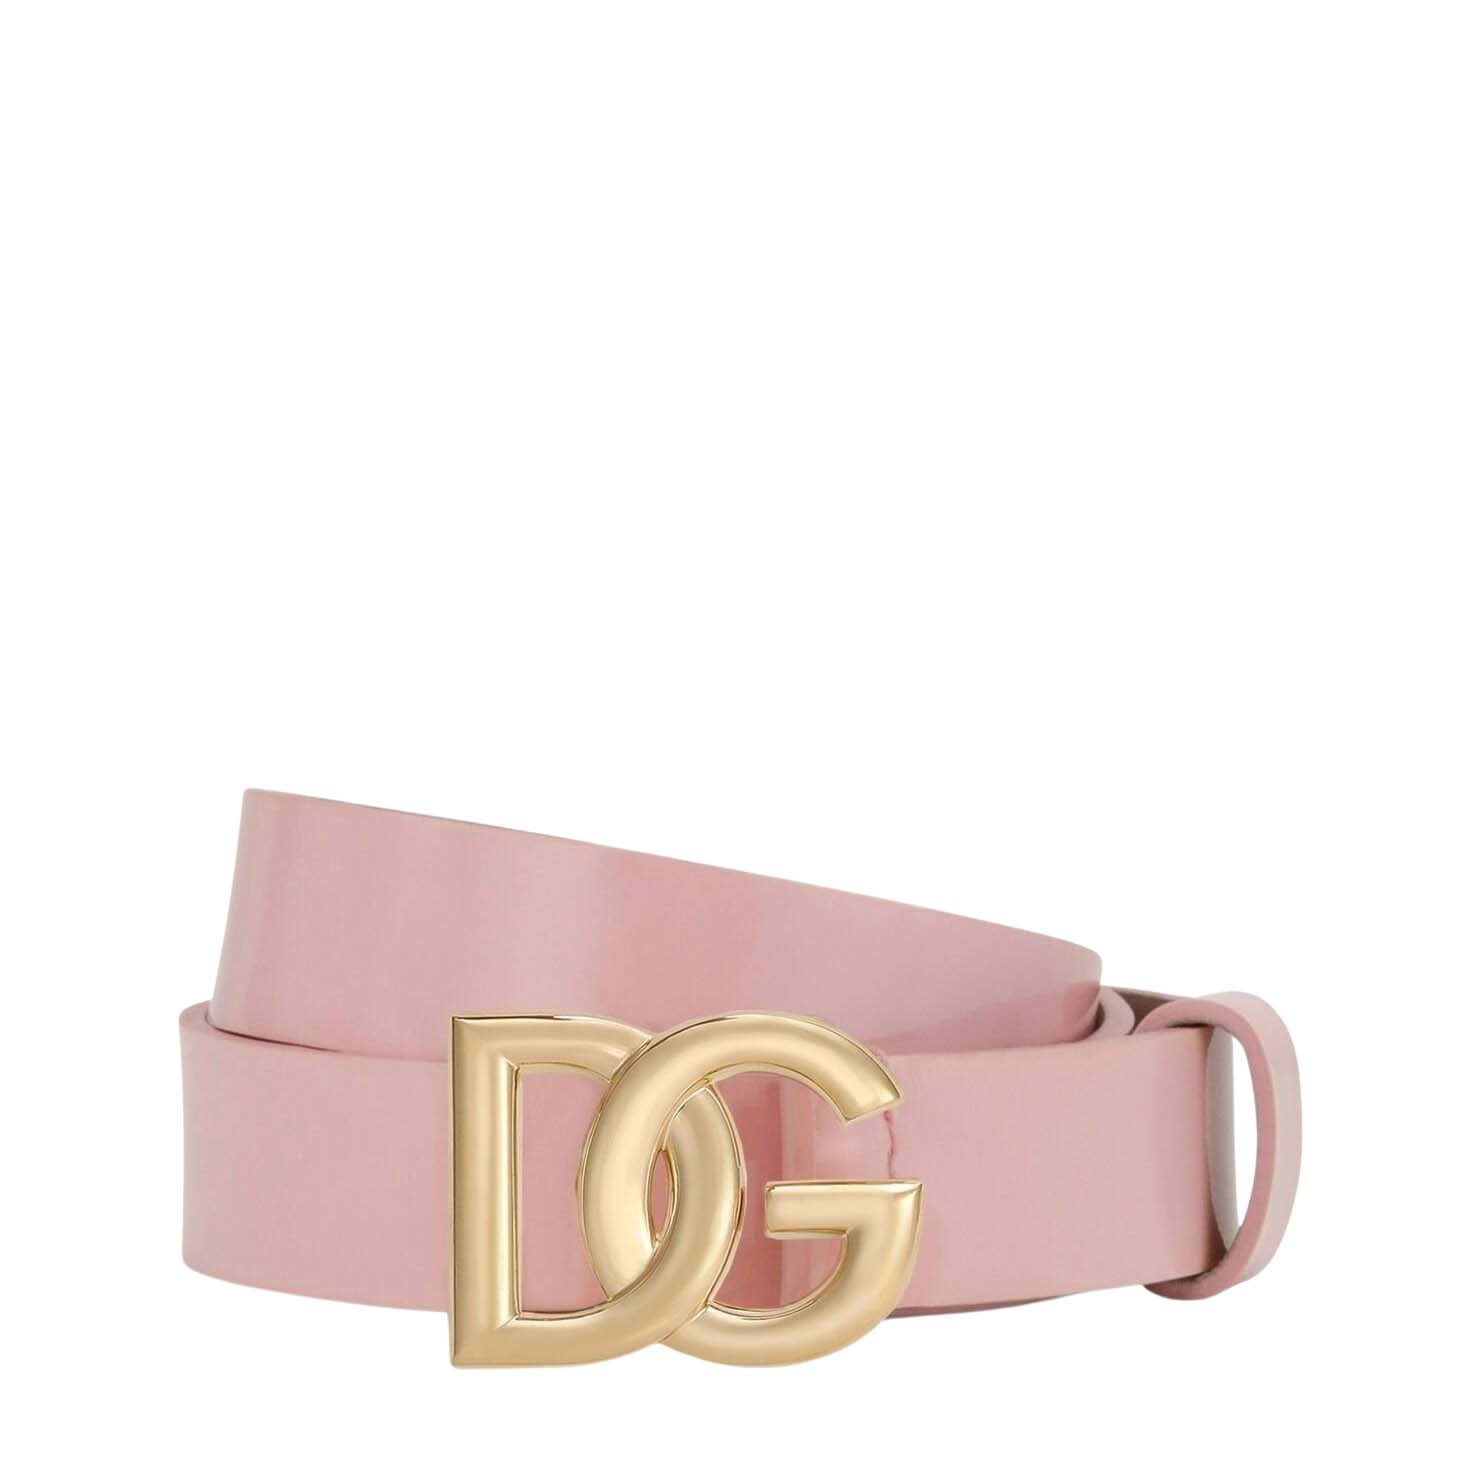 archief gebaar Fonetiek Dolce & Gabbana - Logo Belt - Continuativo - Pink 1 - Lolly Pop Kindermode